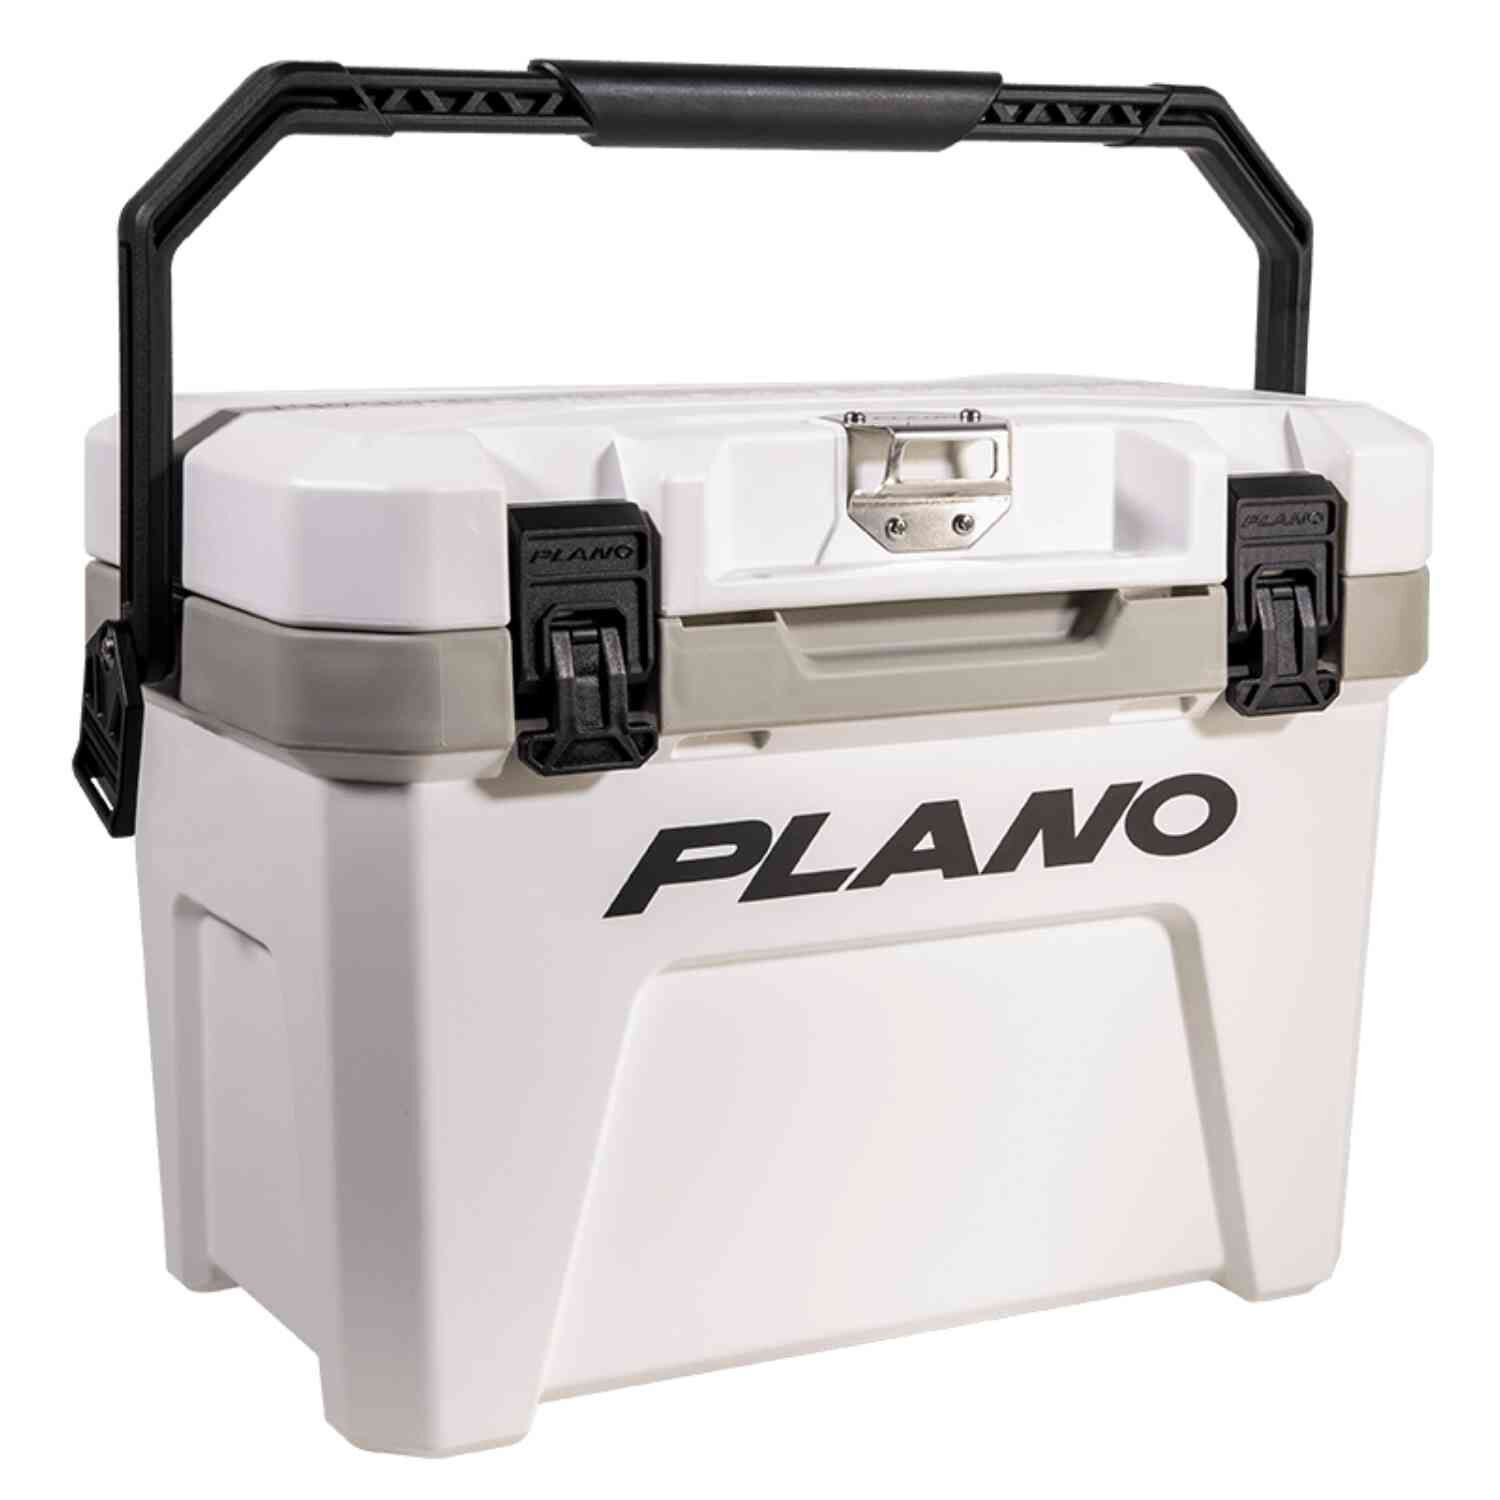 Plano Frost Cooler 13 Liter White